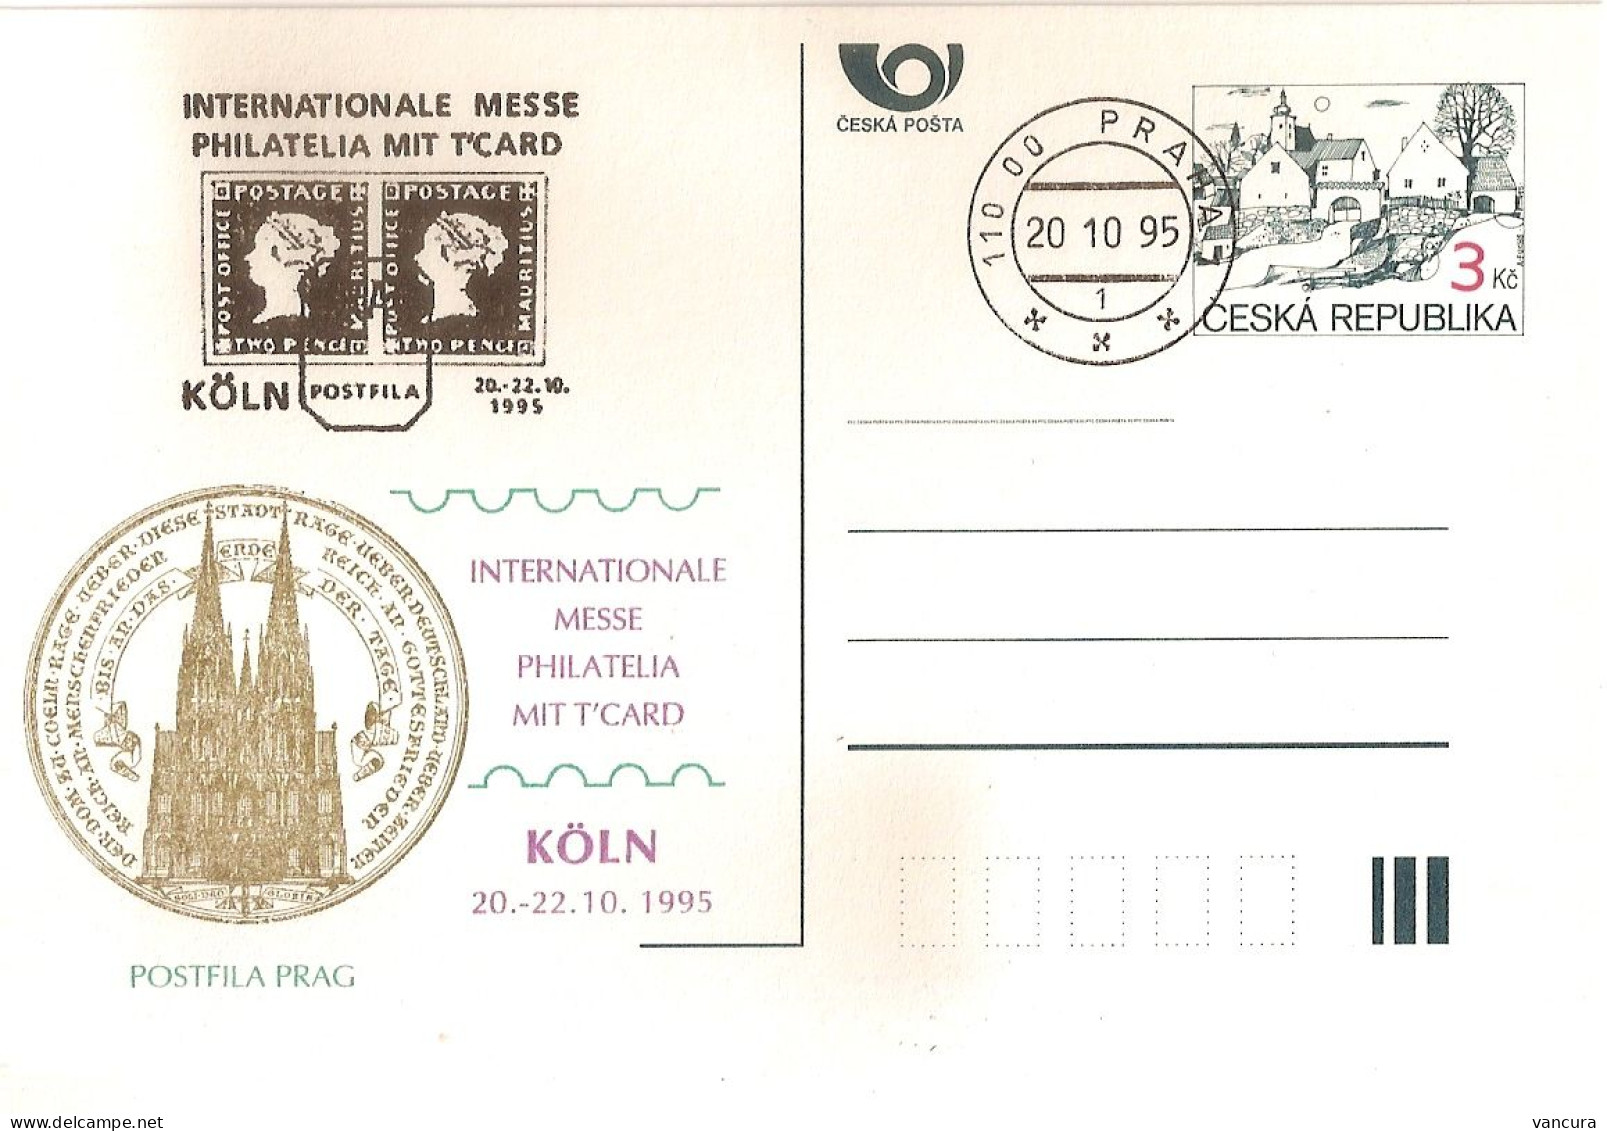 CDV A 10 Czech Republic Köln 1995 NOTICE POOR SCAN, BUT THE CARD IS PERFECT! Pennyblack - Postcards